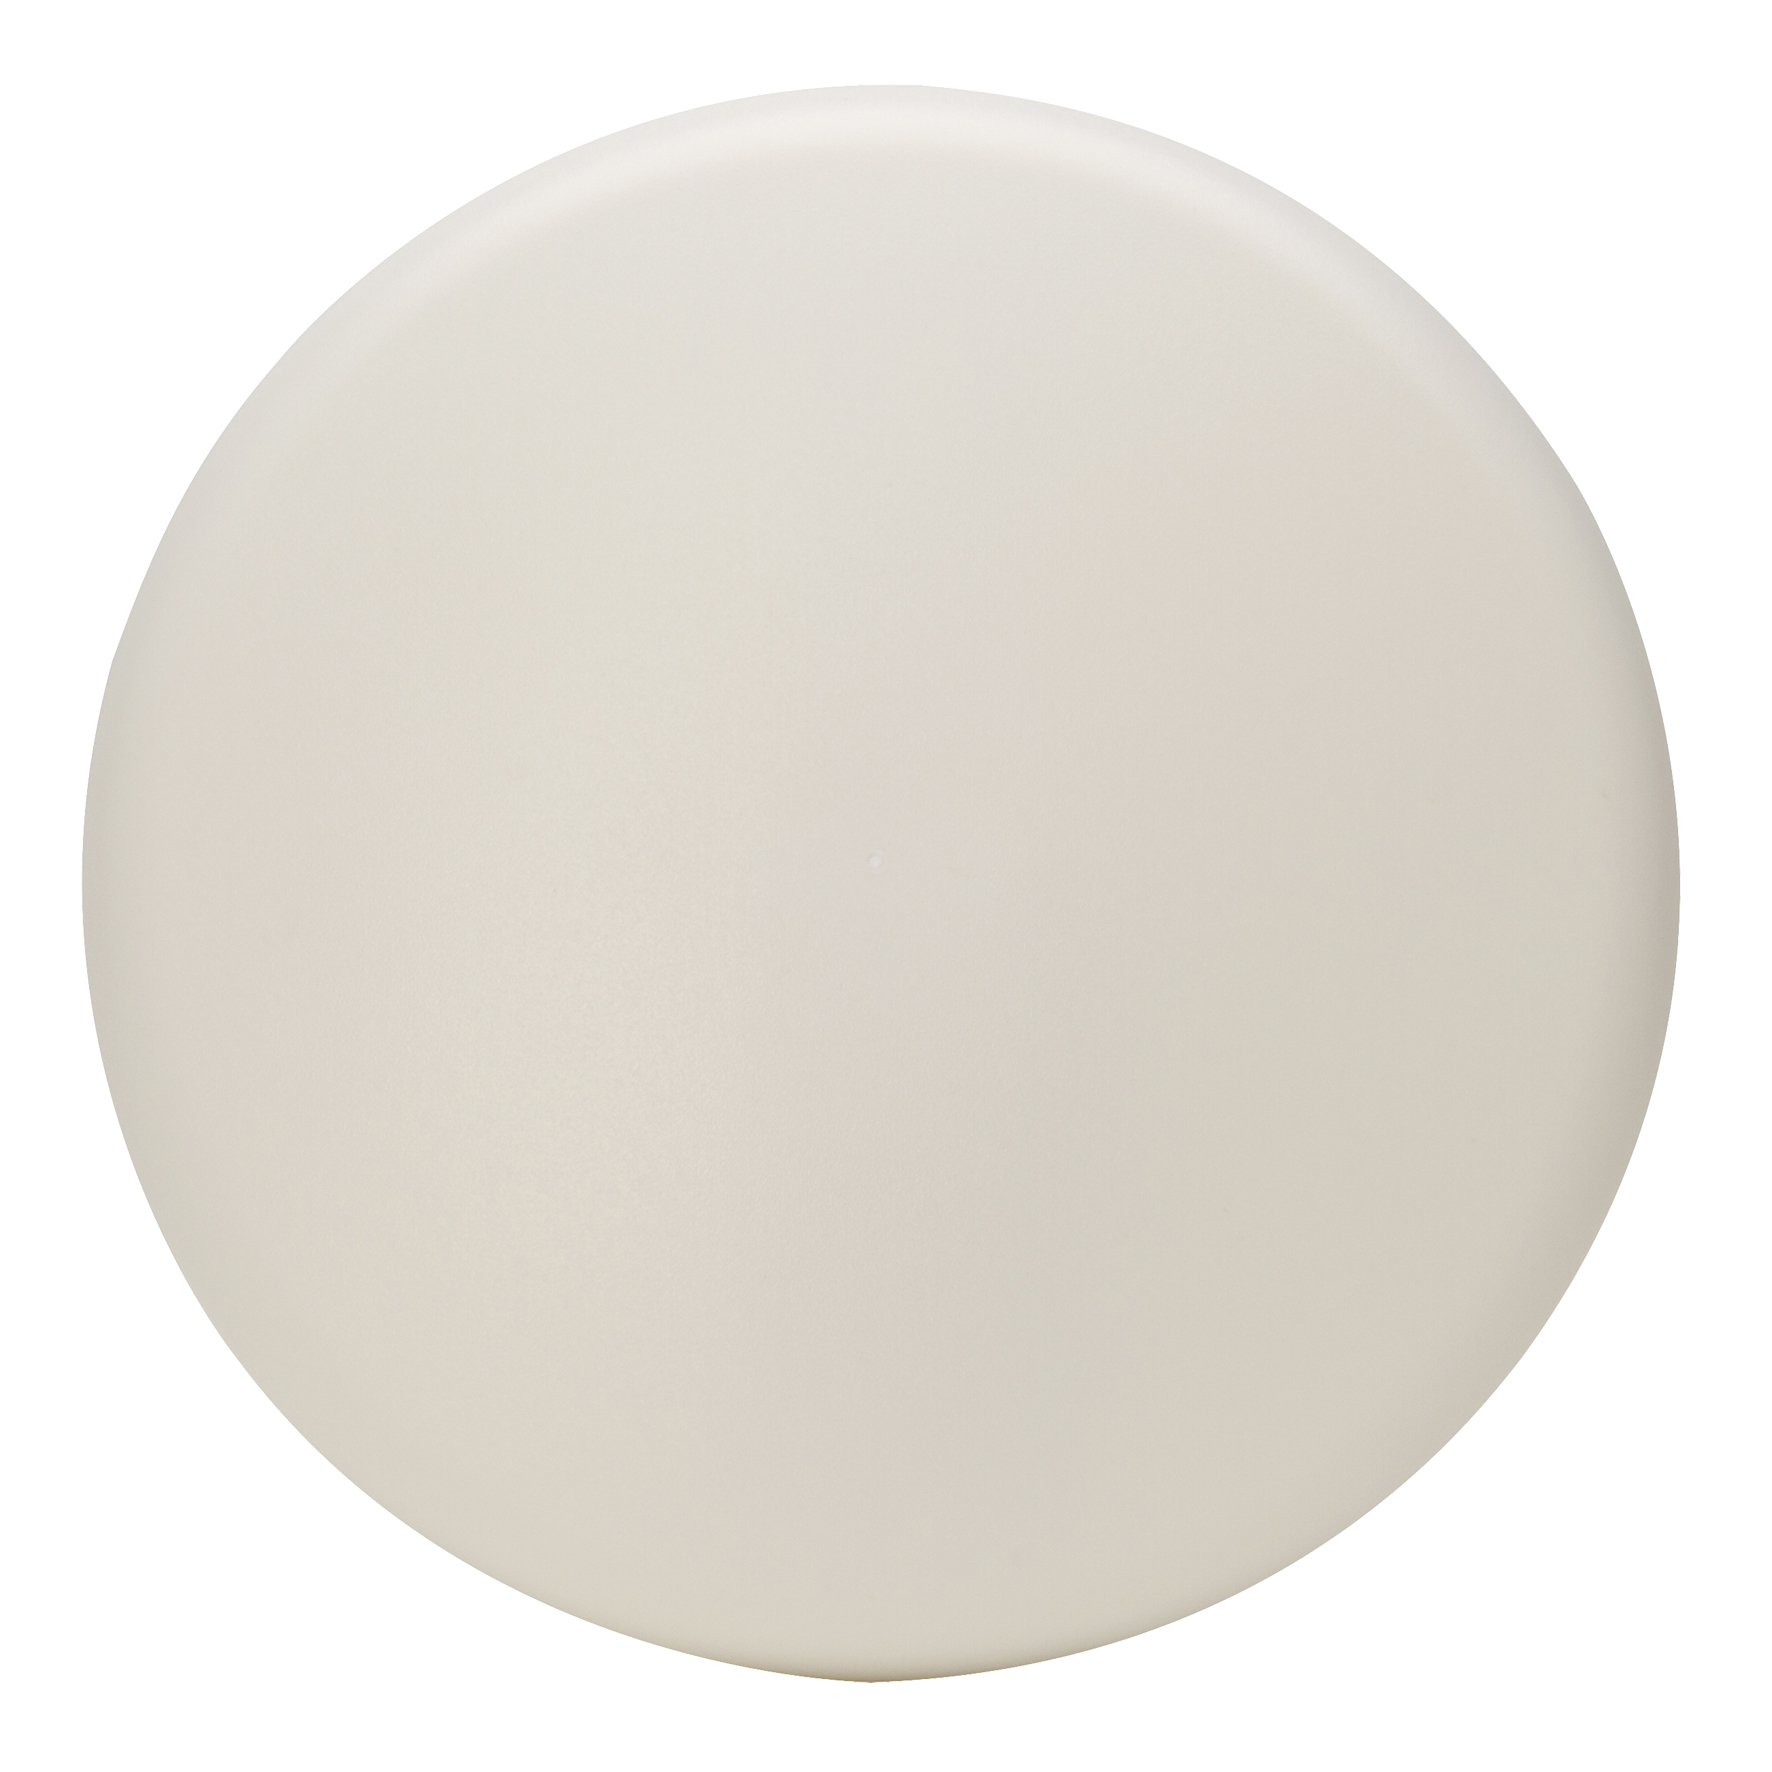 Kopp 33346366 Ceiling Cover Plate Round White